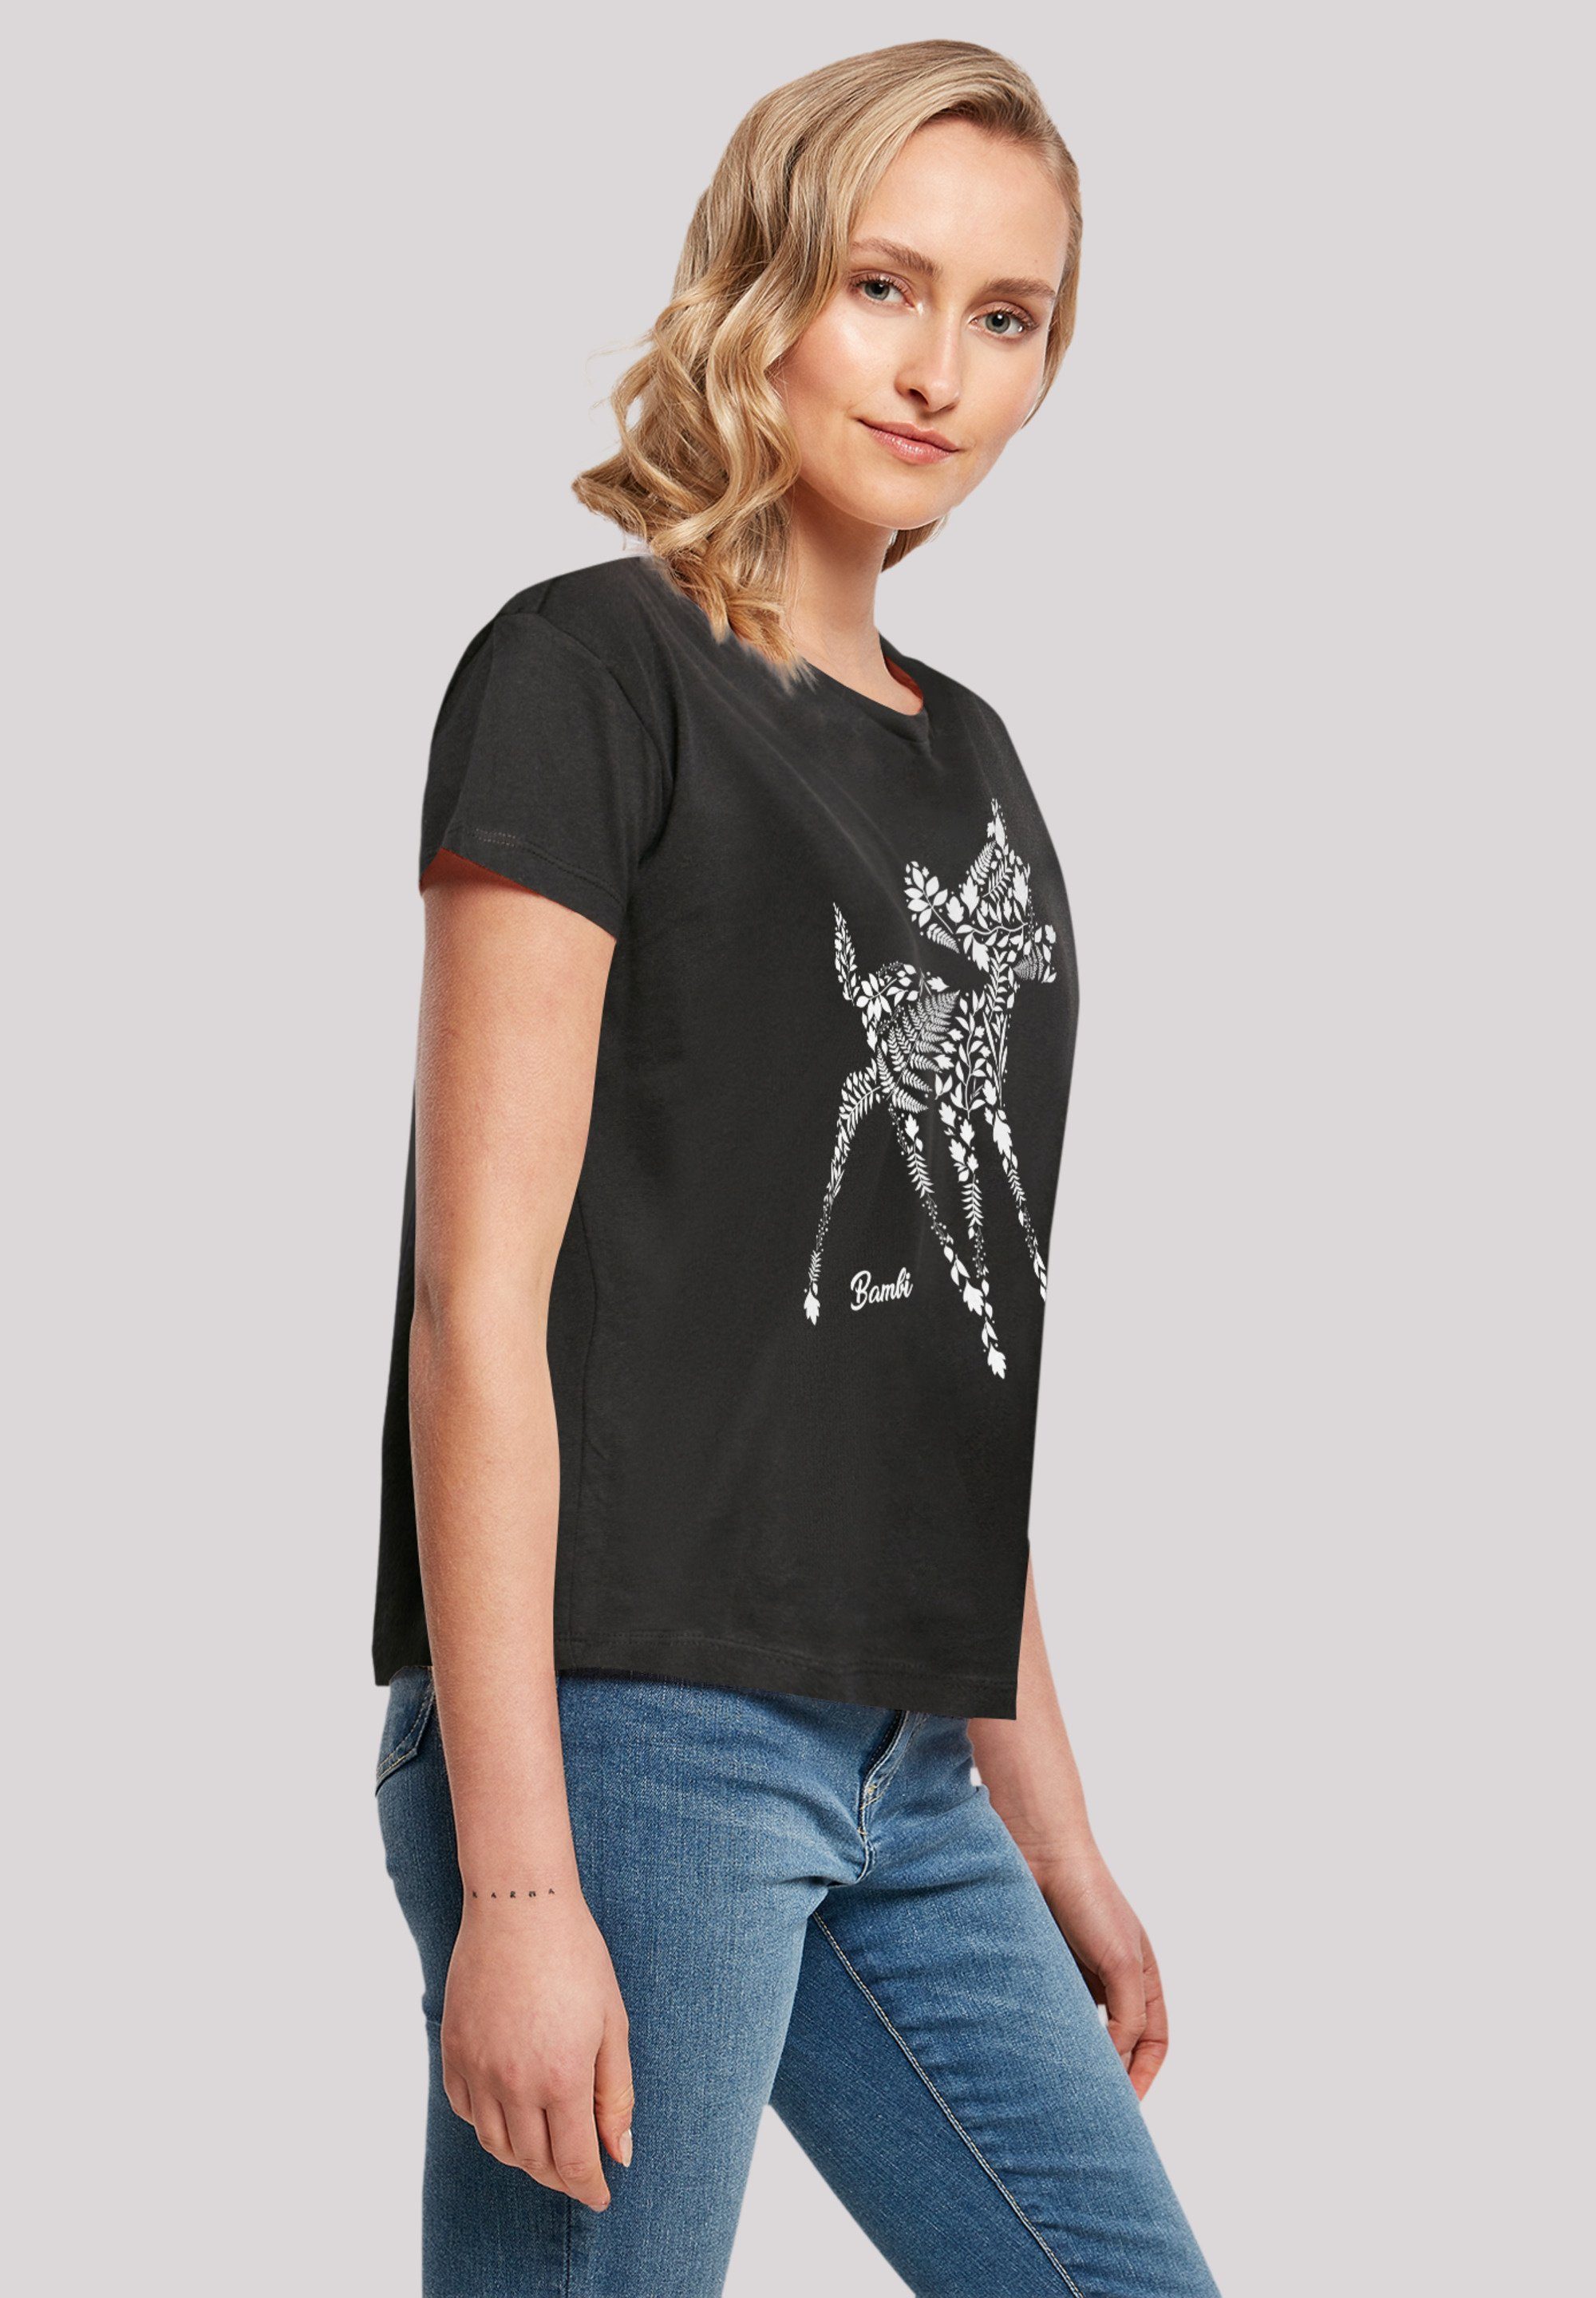 F4NT4STIC T-Shirt Disney Bambi Botanica Premium Qualität